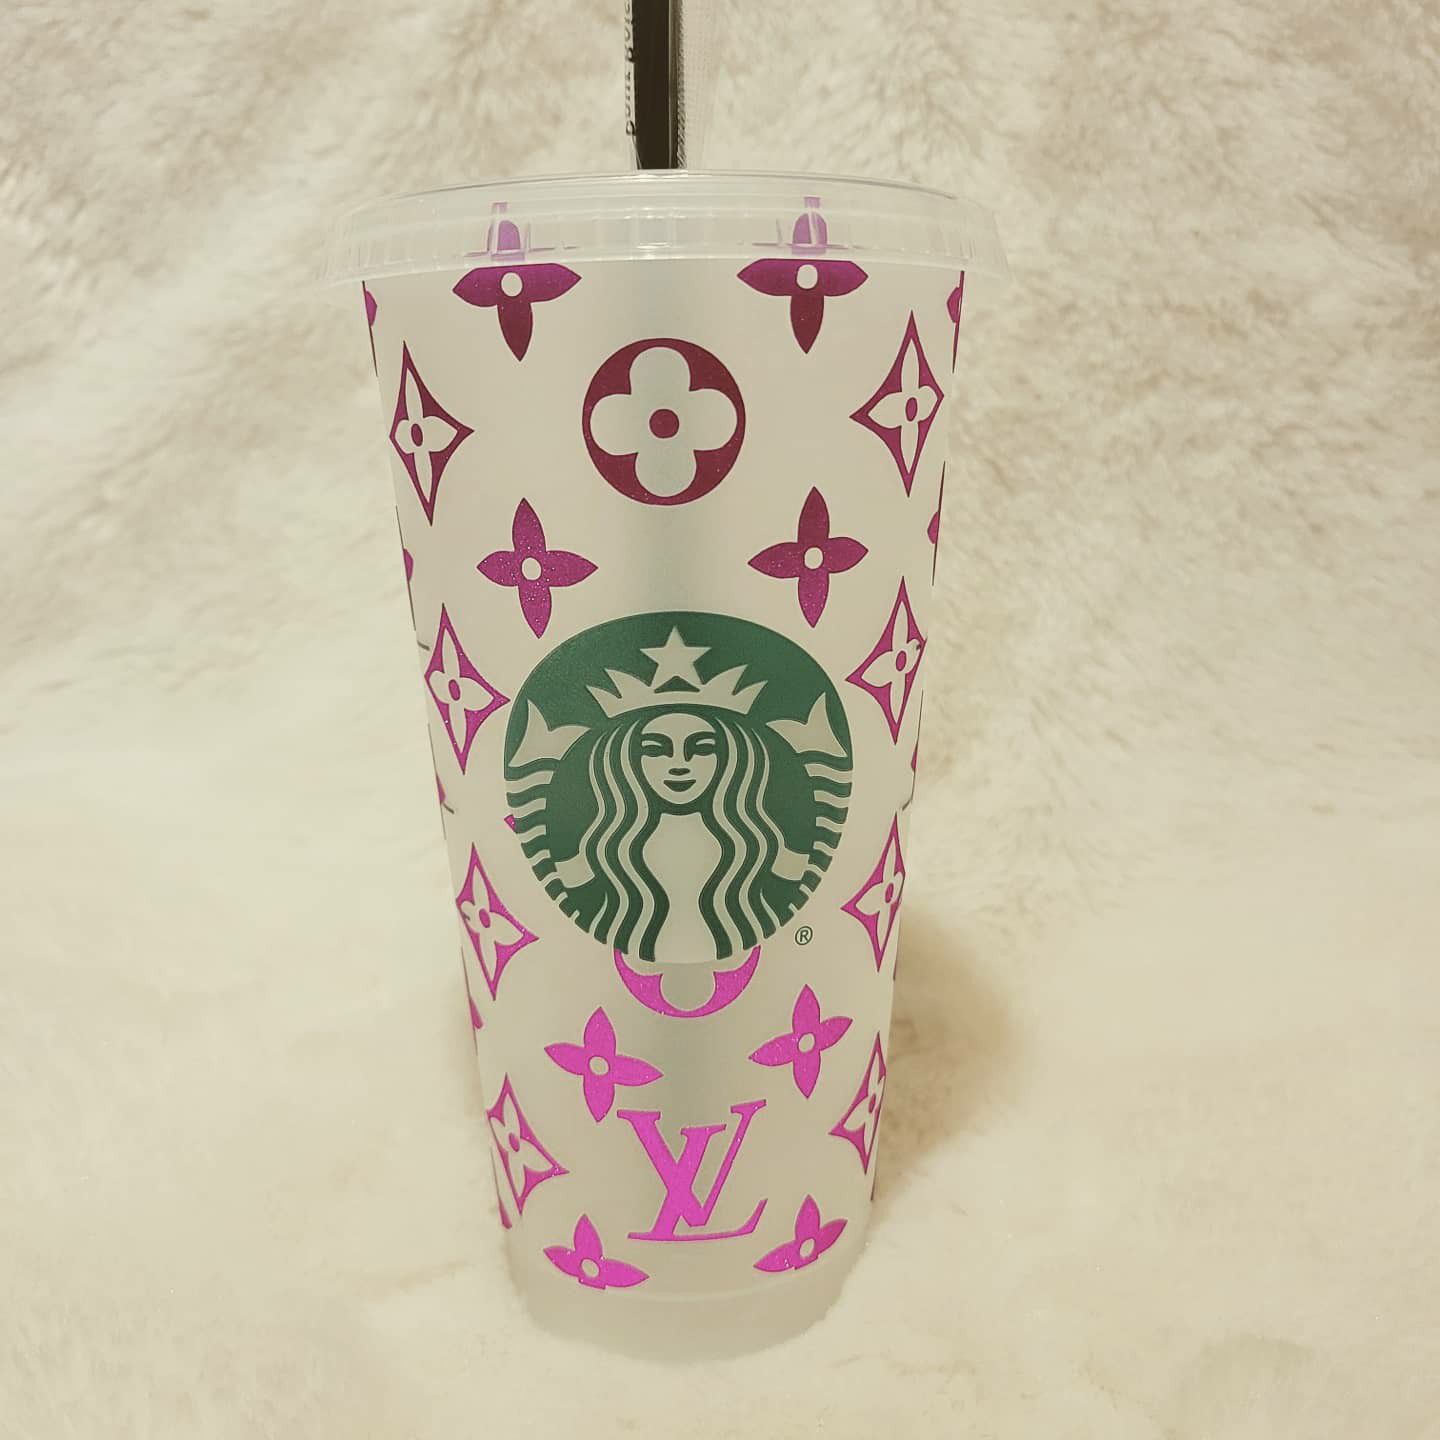 Customized Starbucks cup